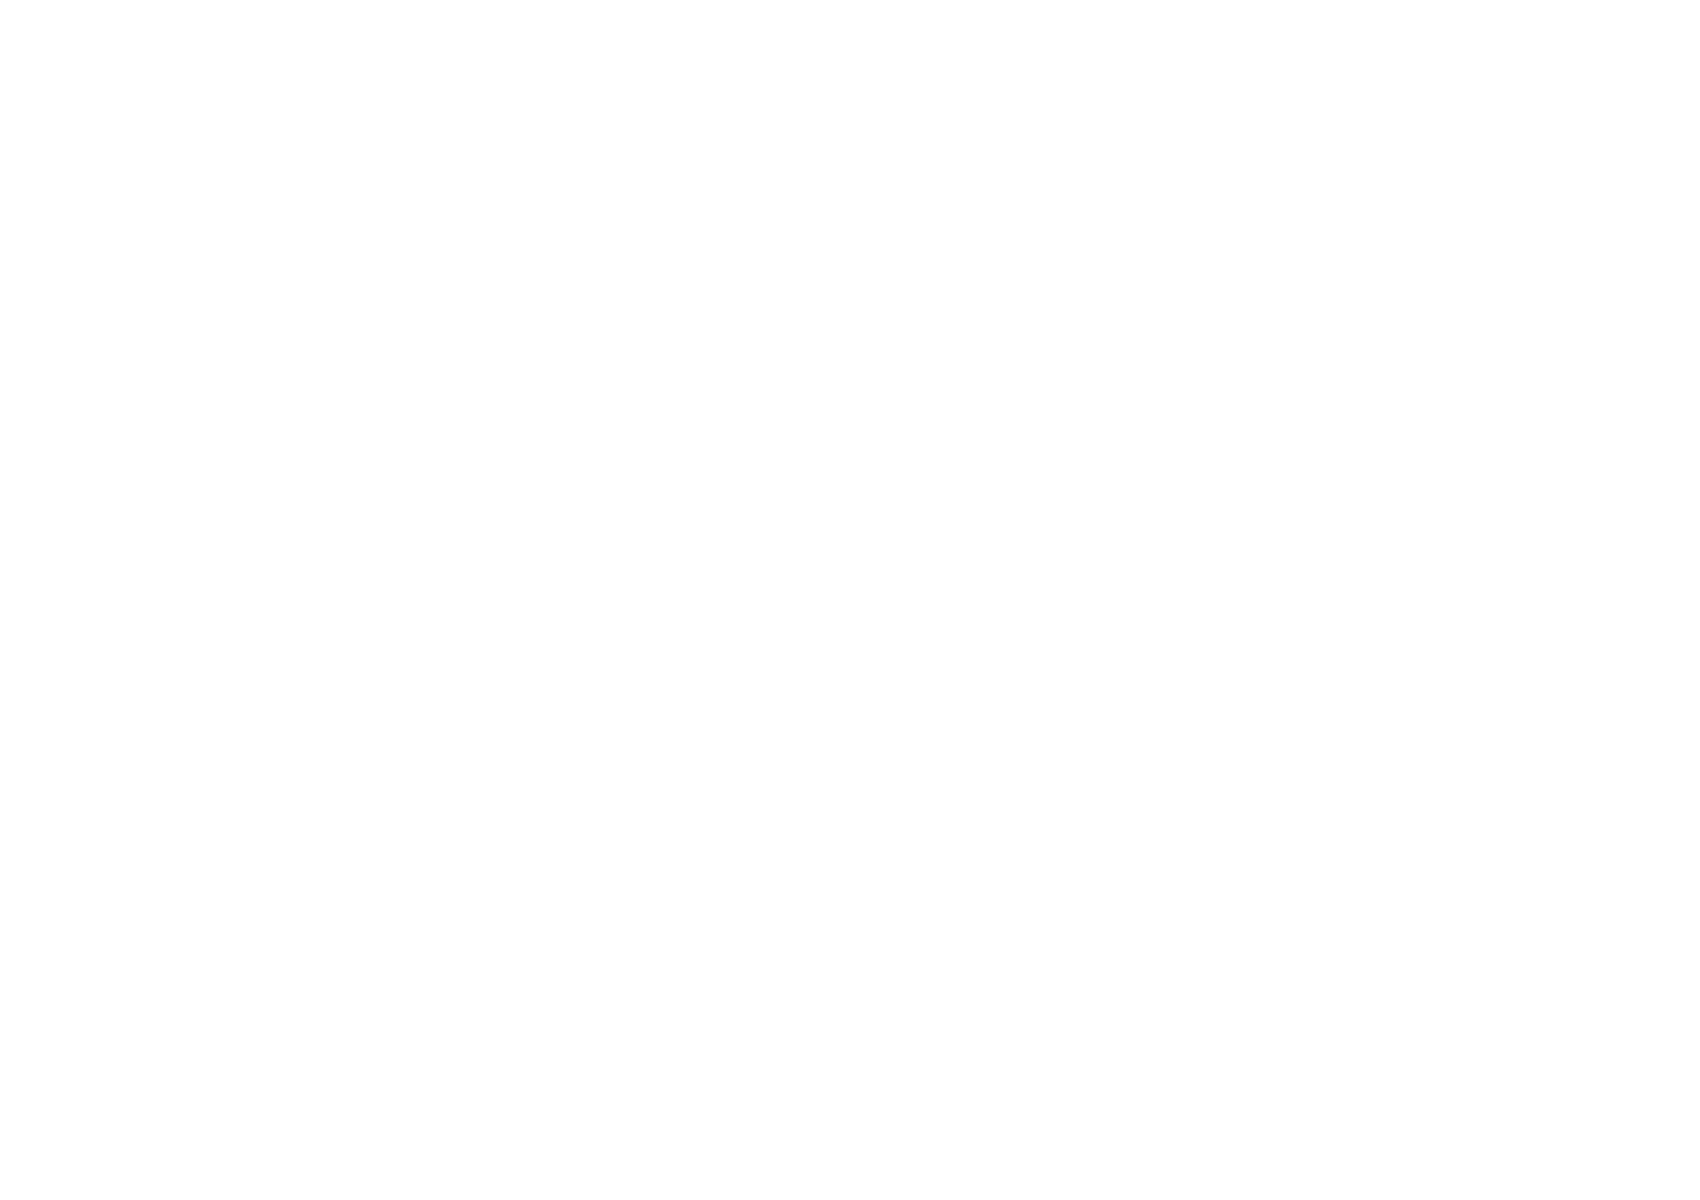 Monster Truck Championship on Steam